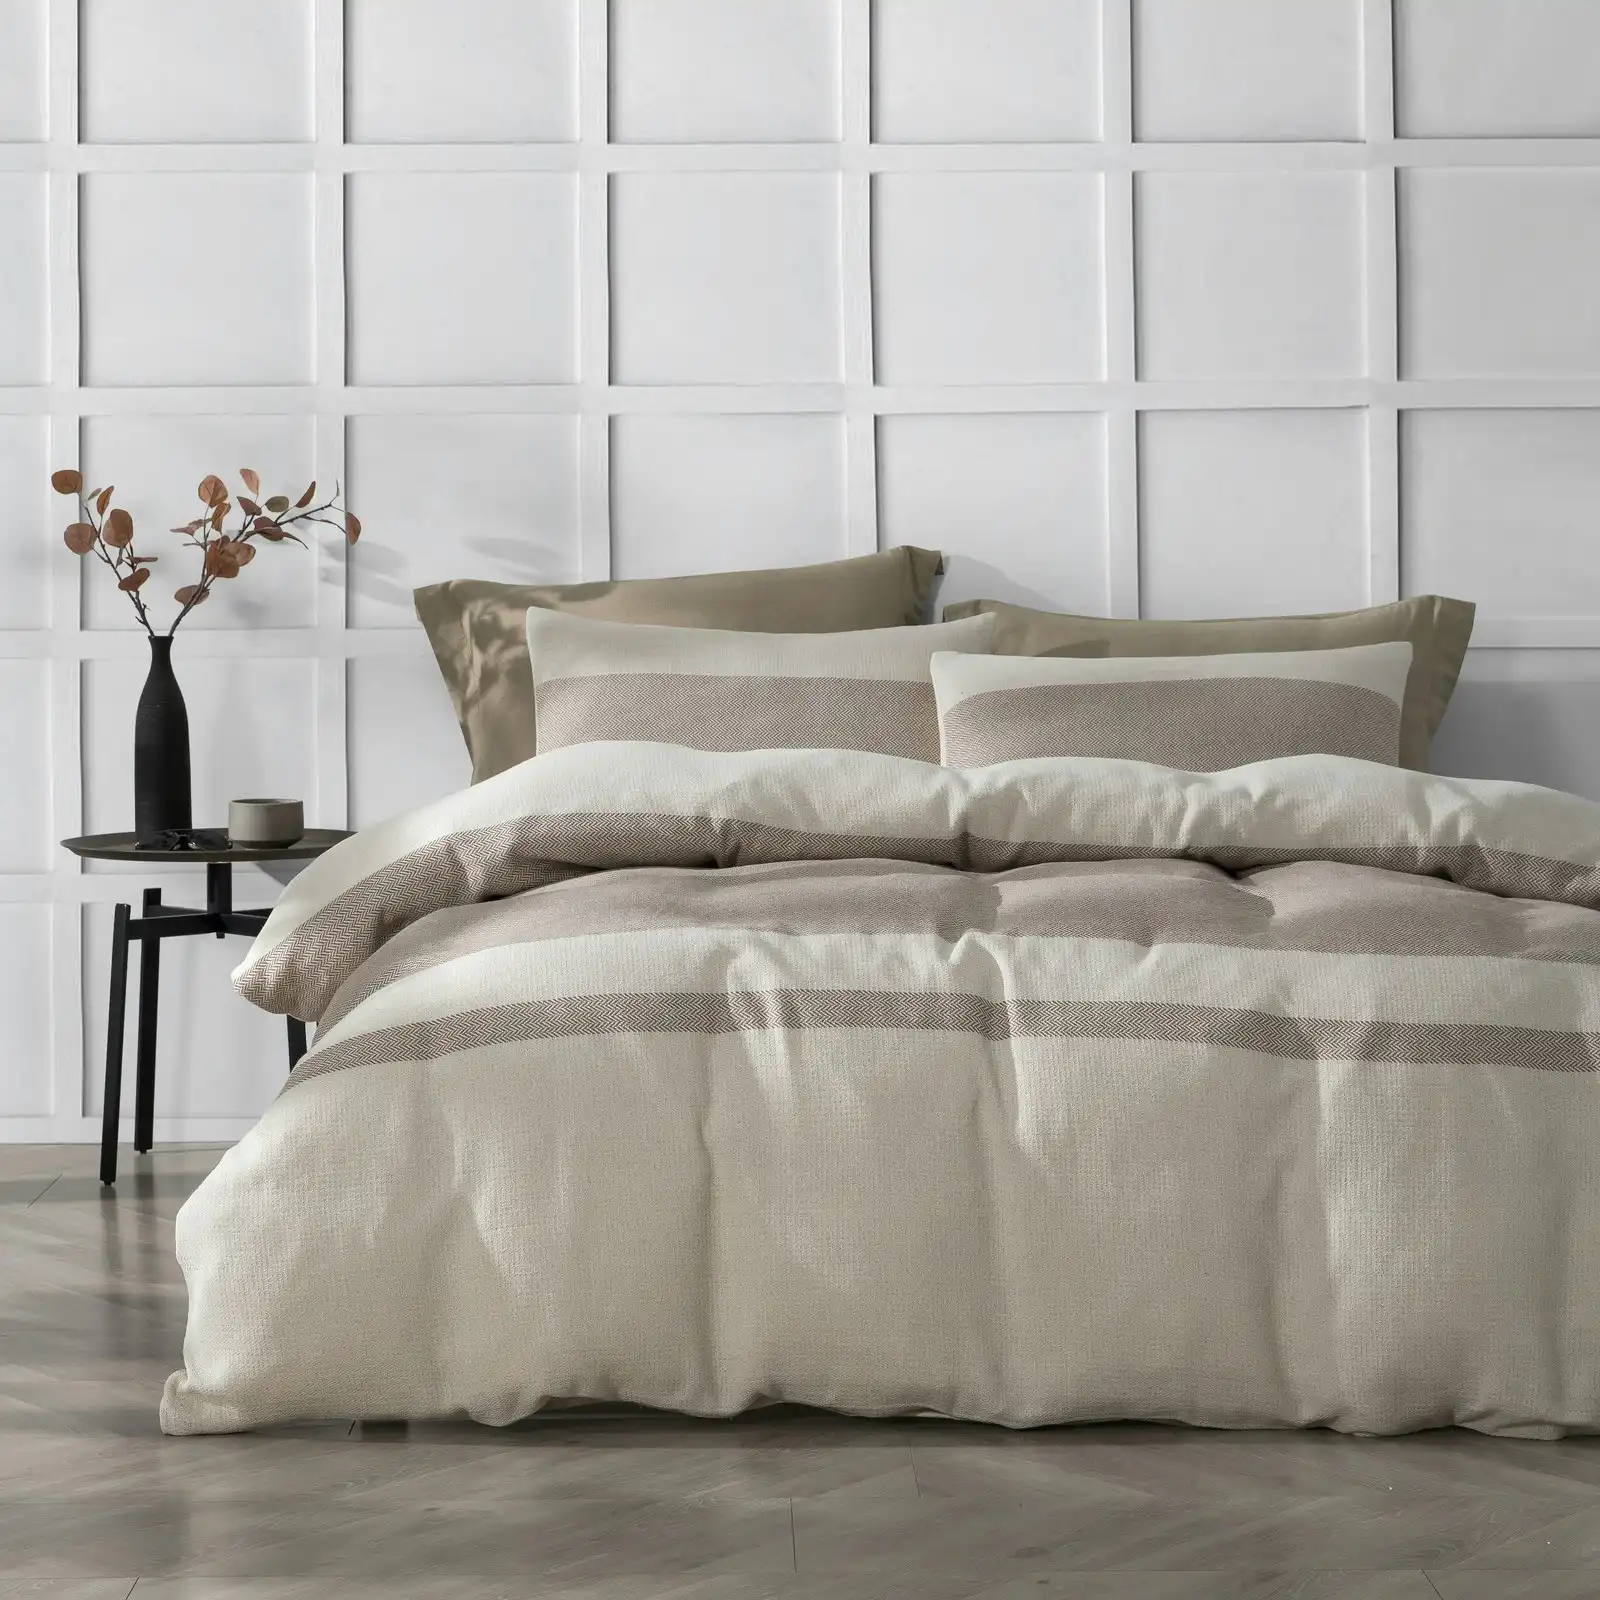 Dreamaker Herringbone 100% Cotton Quilt Cover Set Natural - Cream Queen Bed